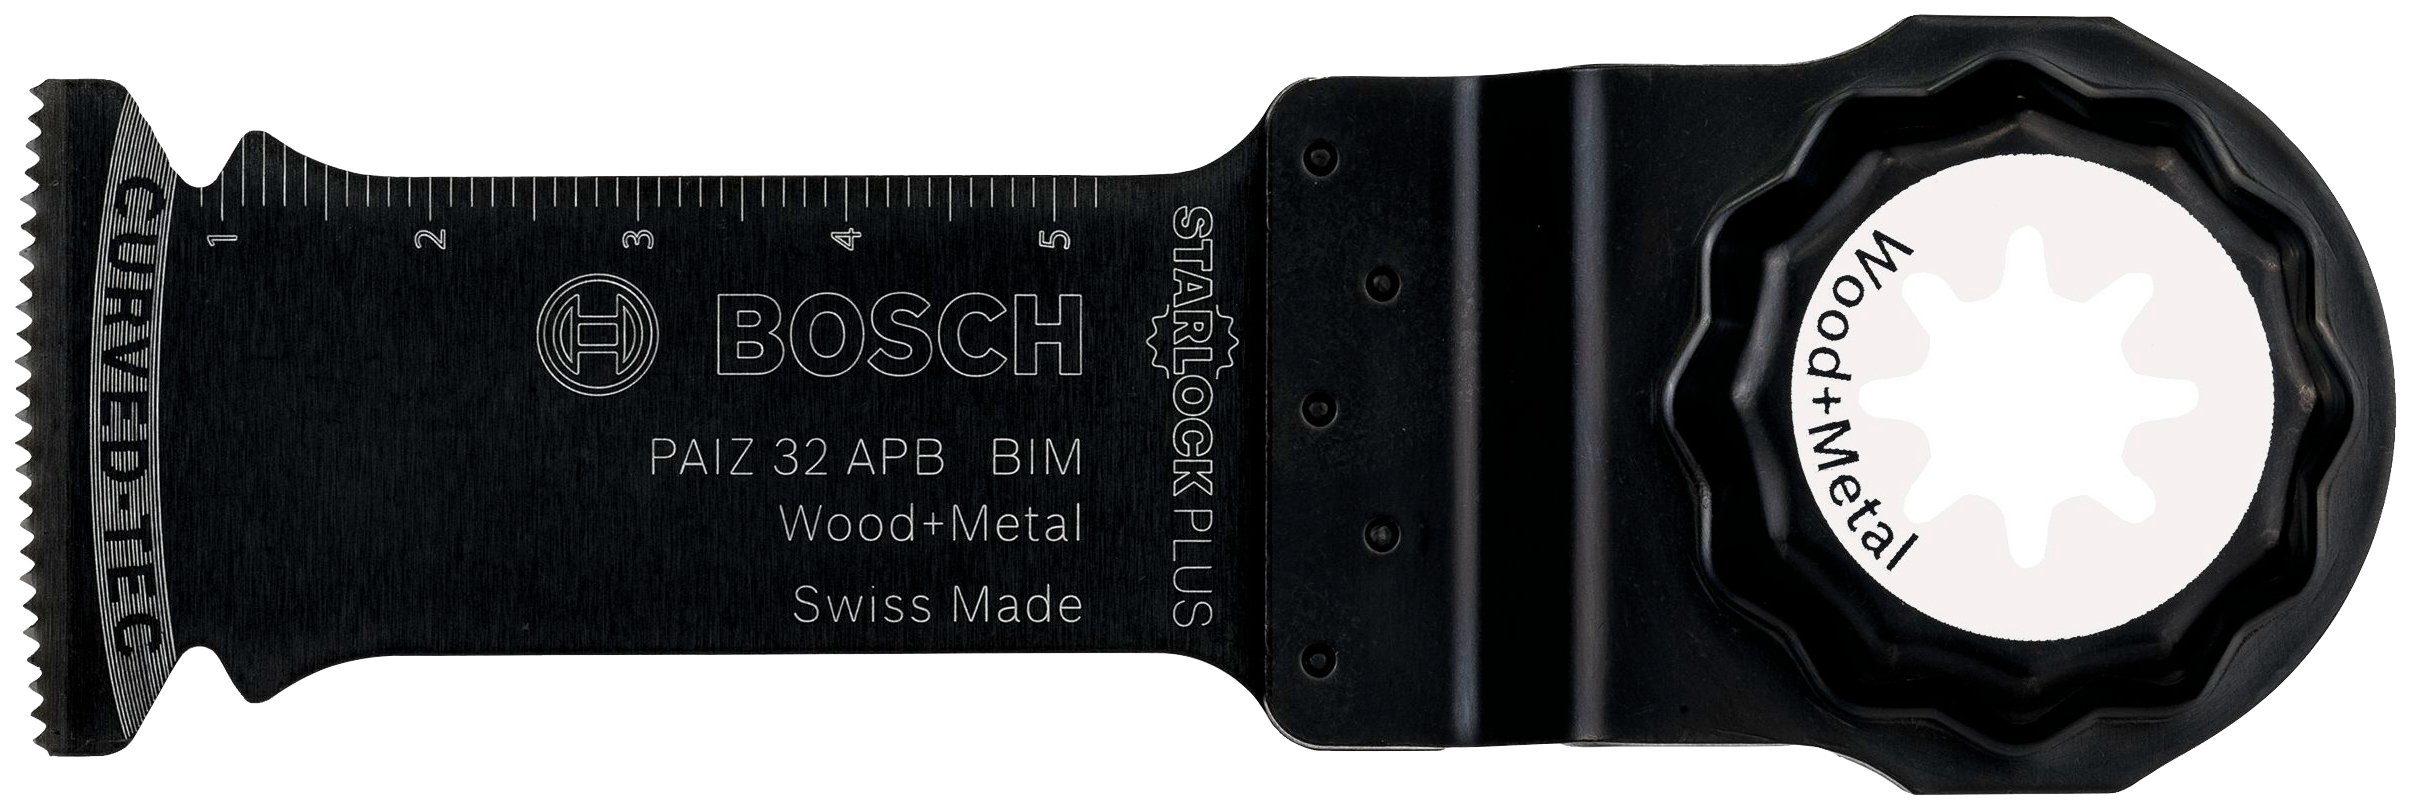 Bosch 32 Professional APB mm RB 60 PAIZ32 (10-St) Tauchsägeblatt x